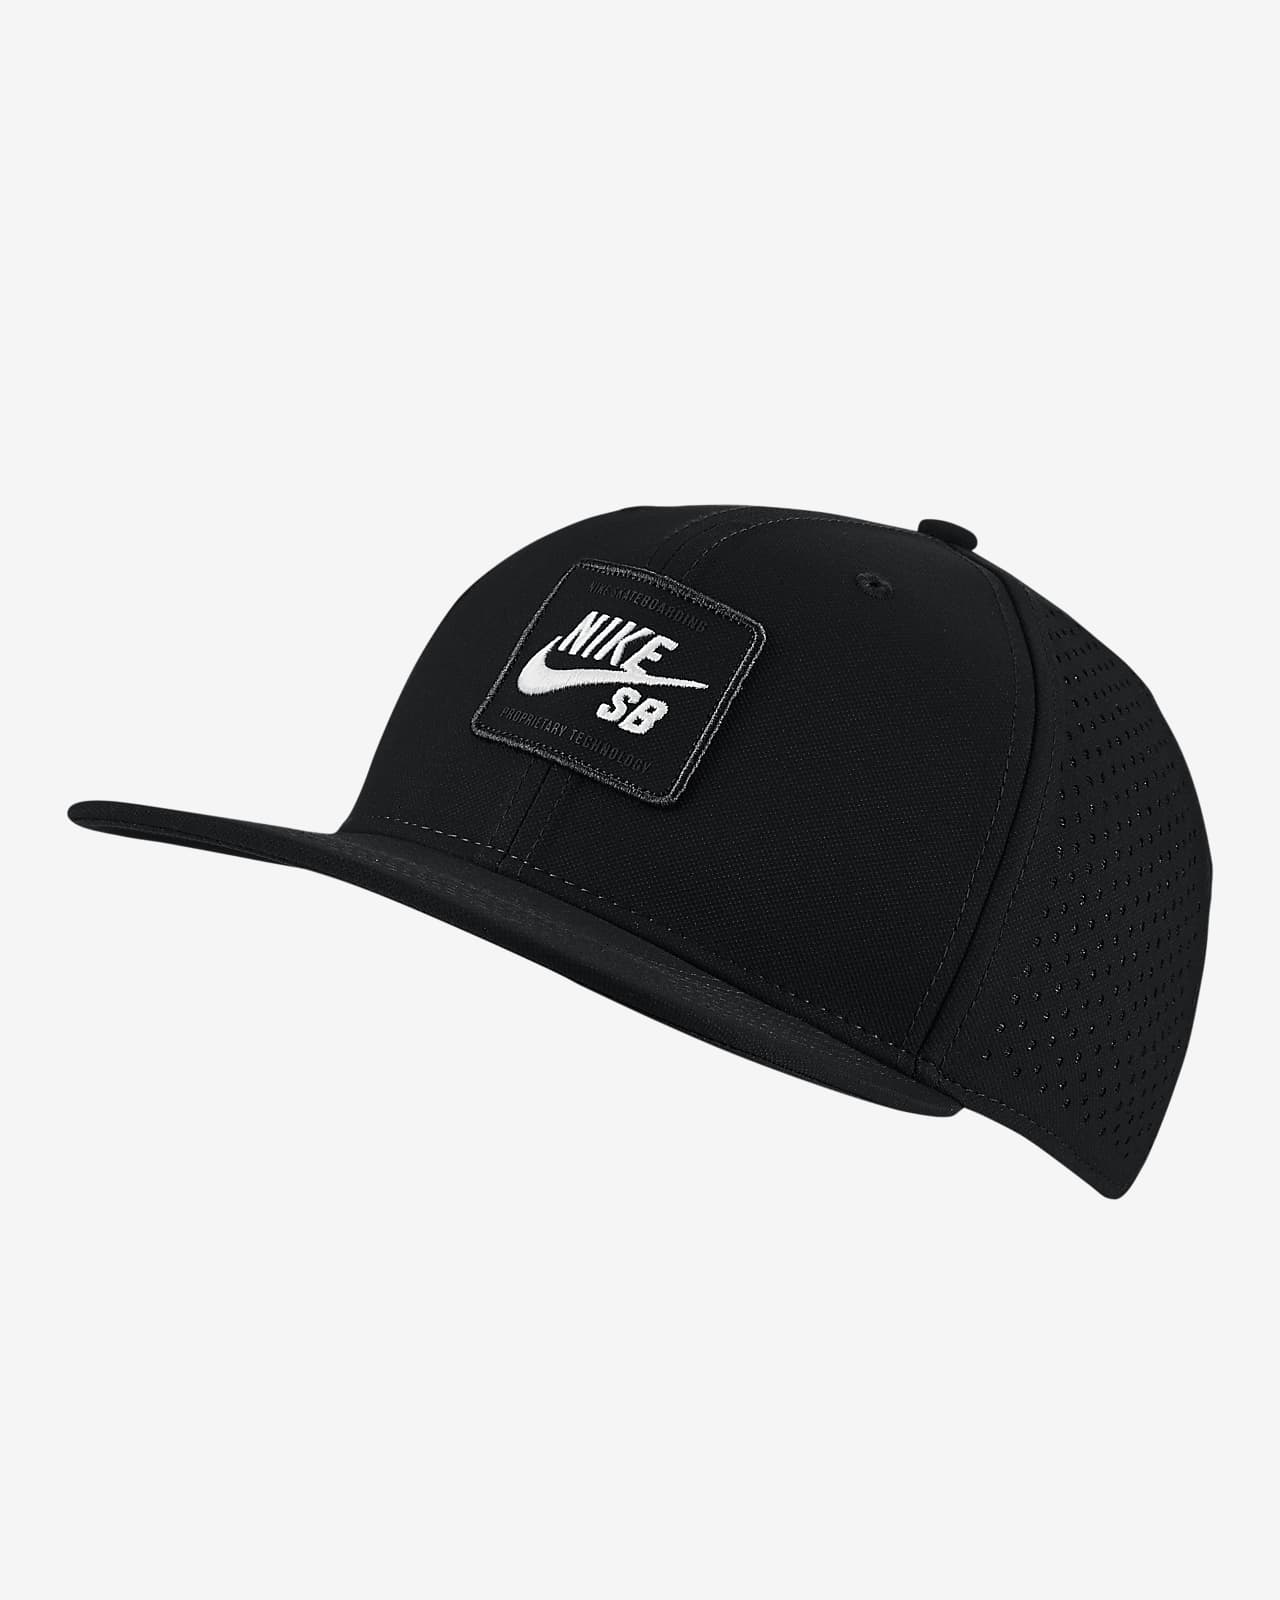 Nike SB AeroBill Pro 2.0 Skate Hat